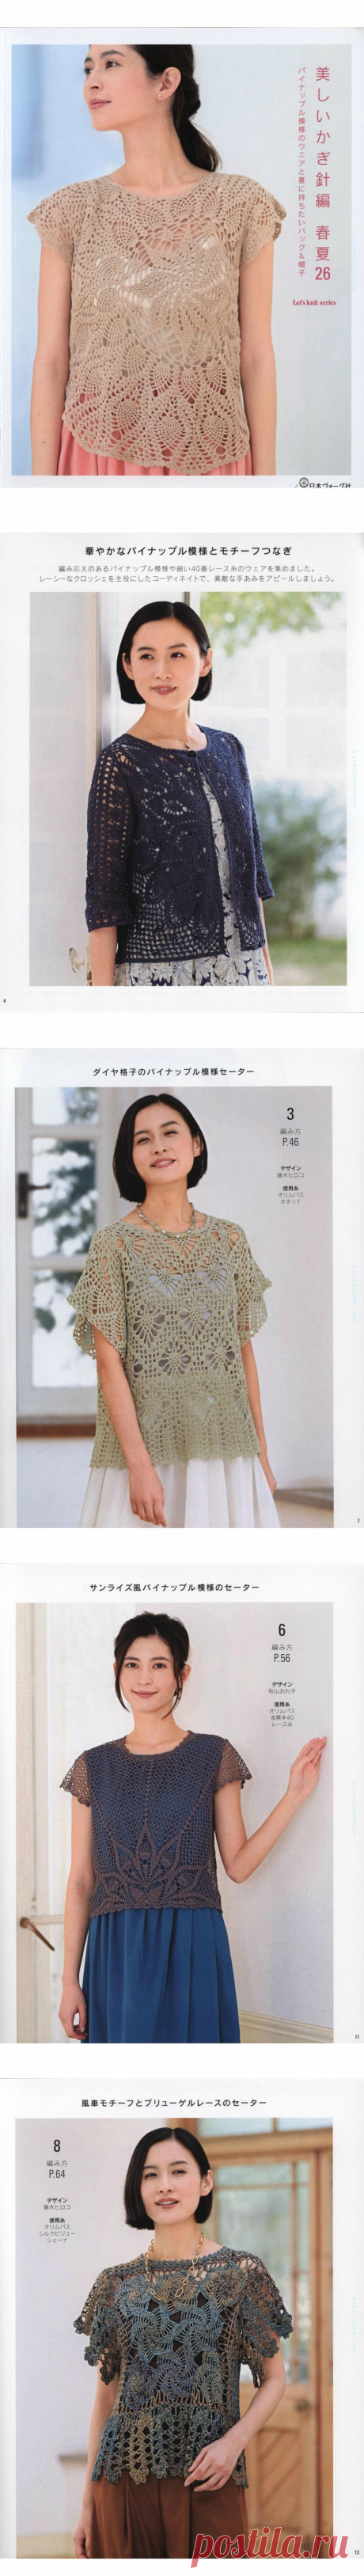 Журнал "Let's Knit Series" №80569 2018г